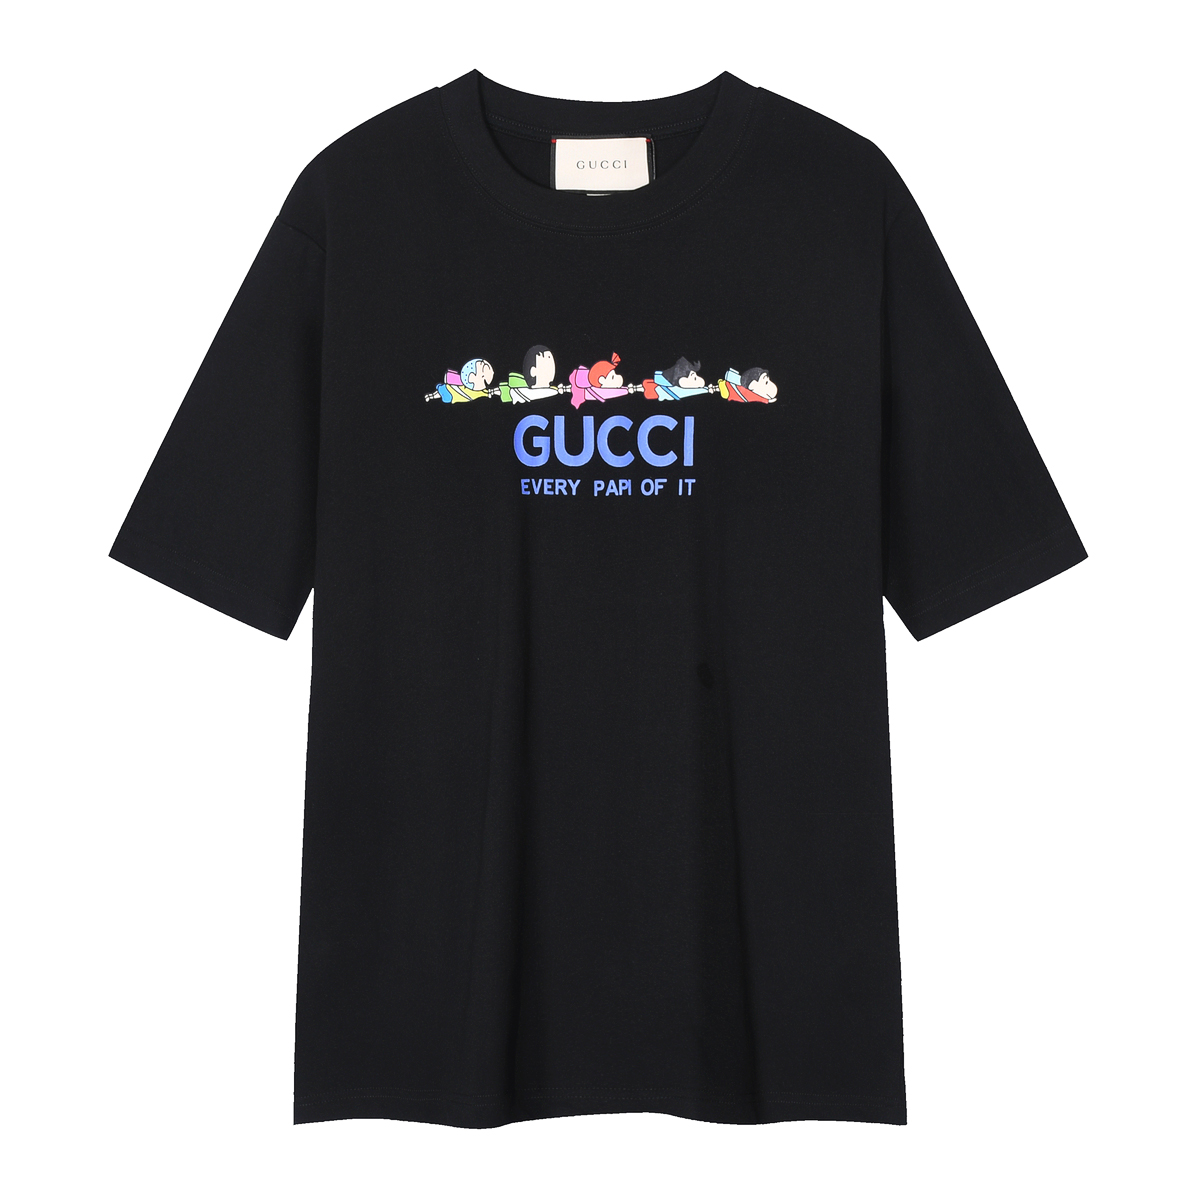 Gucci Clothing T-Shirt Black White Printing Unisex Cotton Fashion Short Sleeve G66916